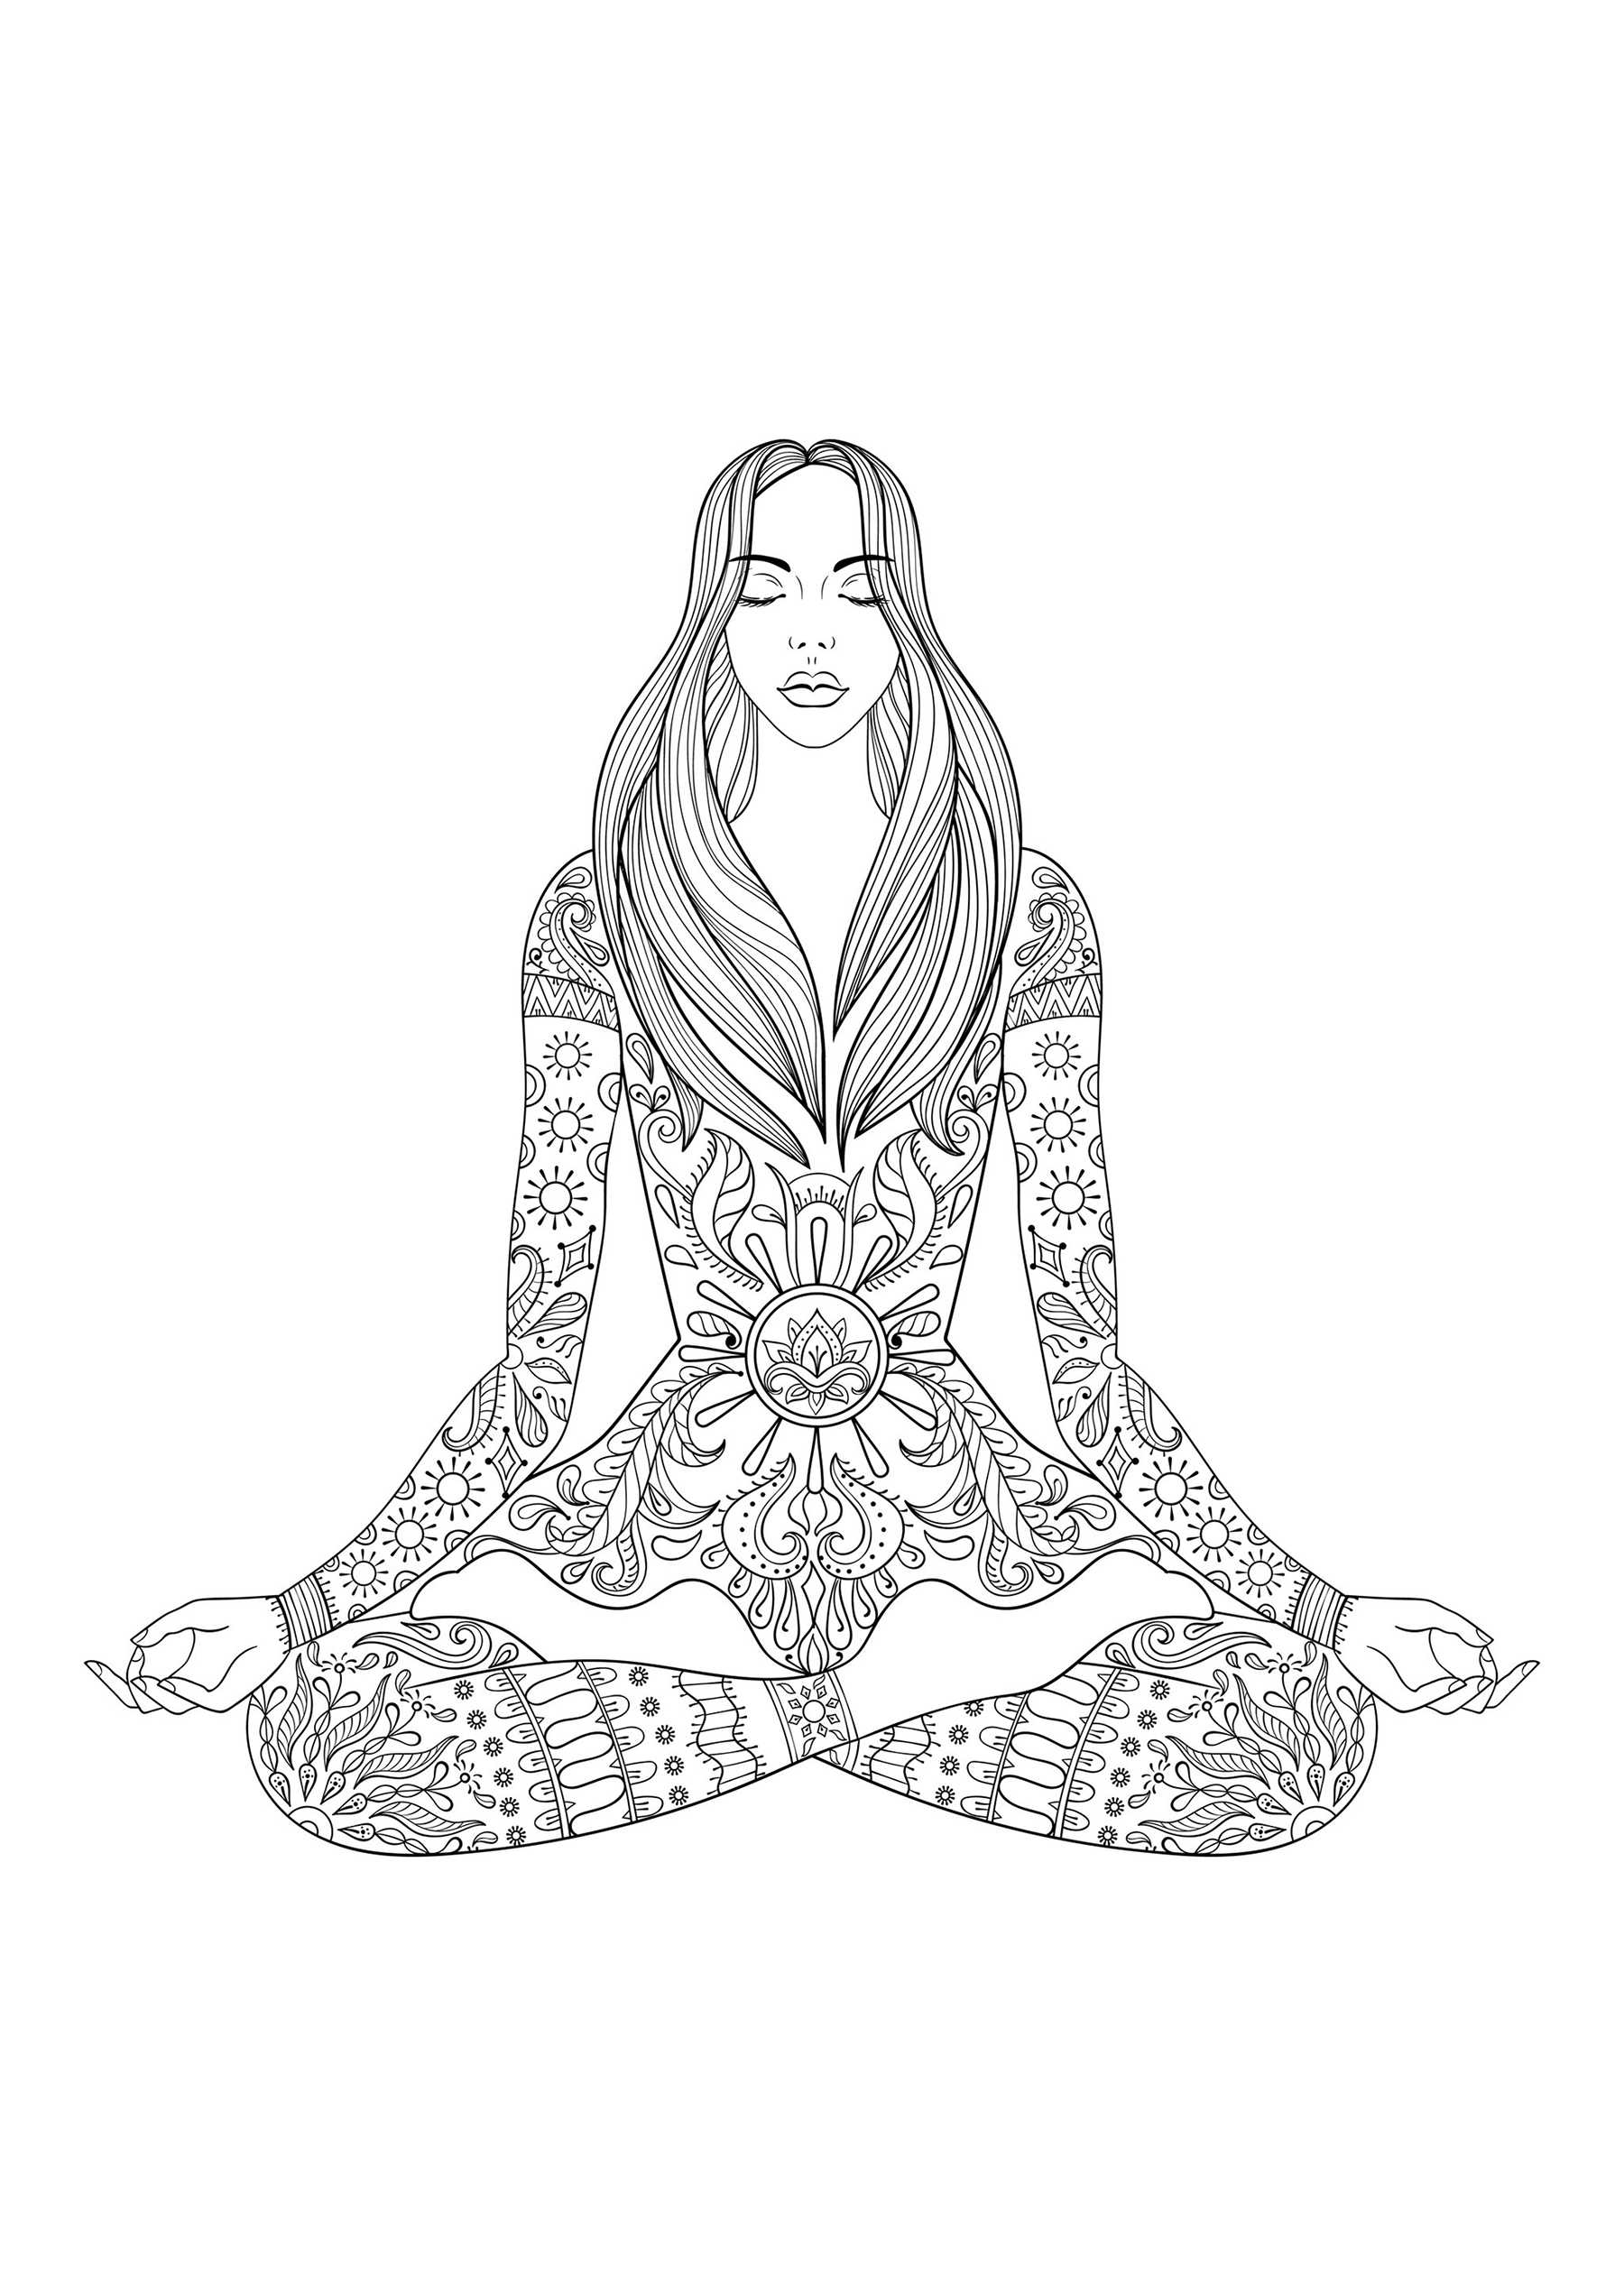 Meditation : Woman sitting in lotus pose, Artist : Ipanki   Source : 123rf